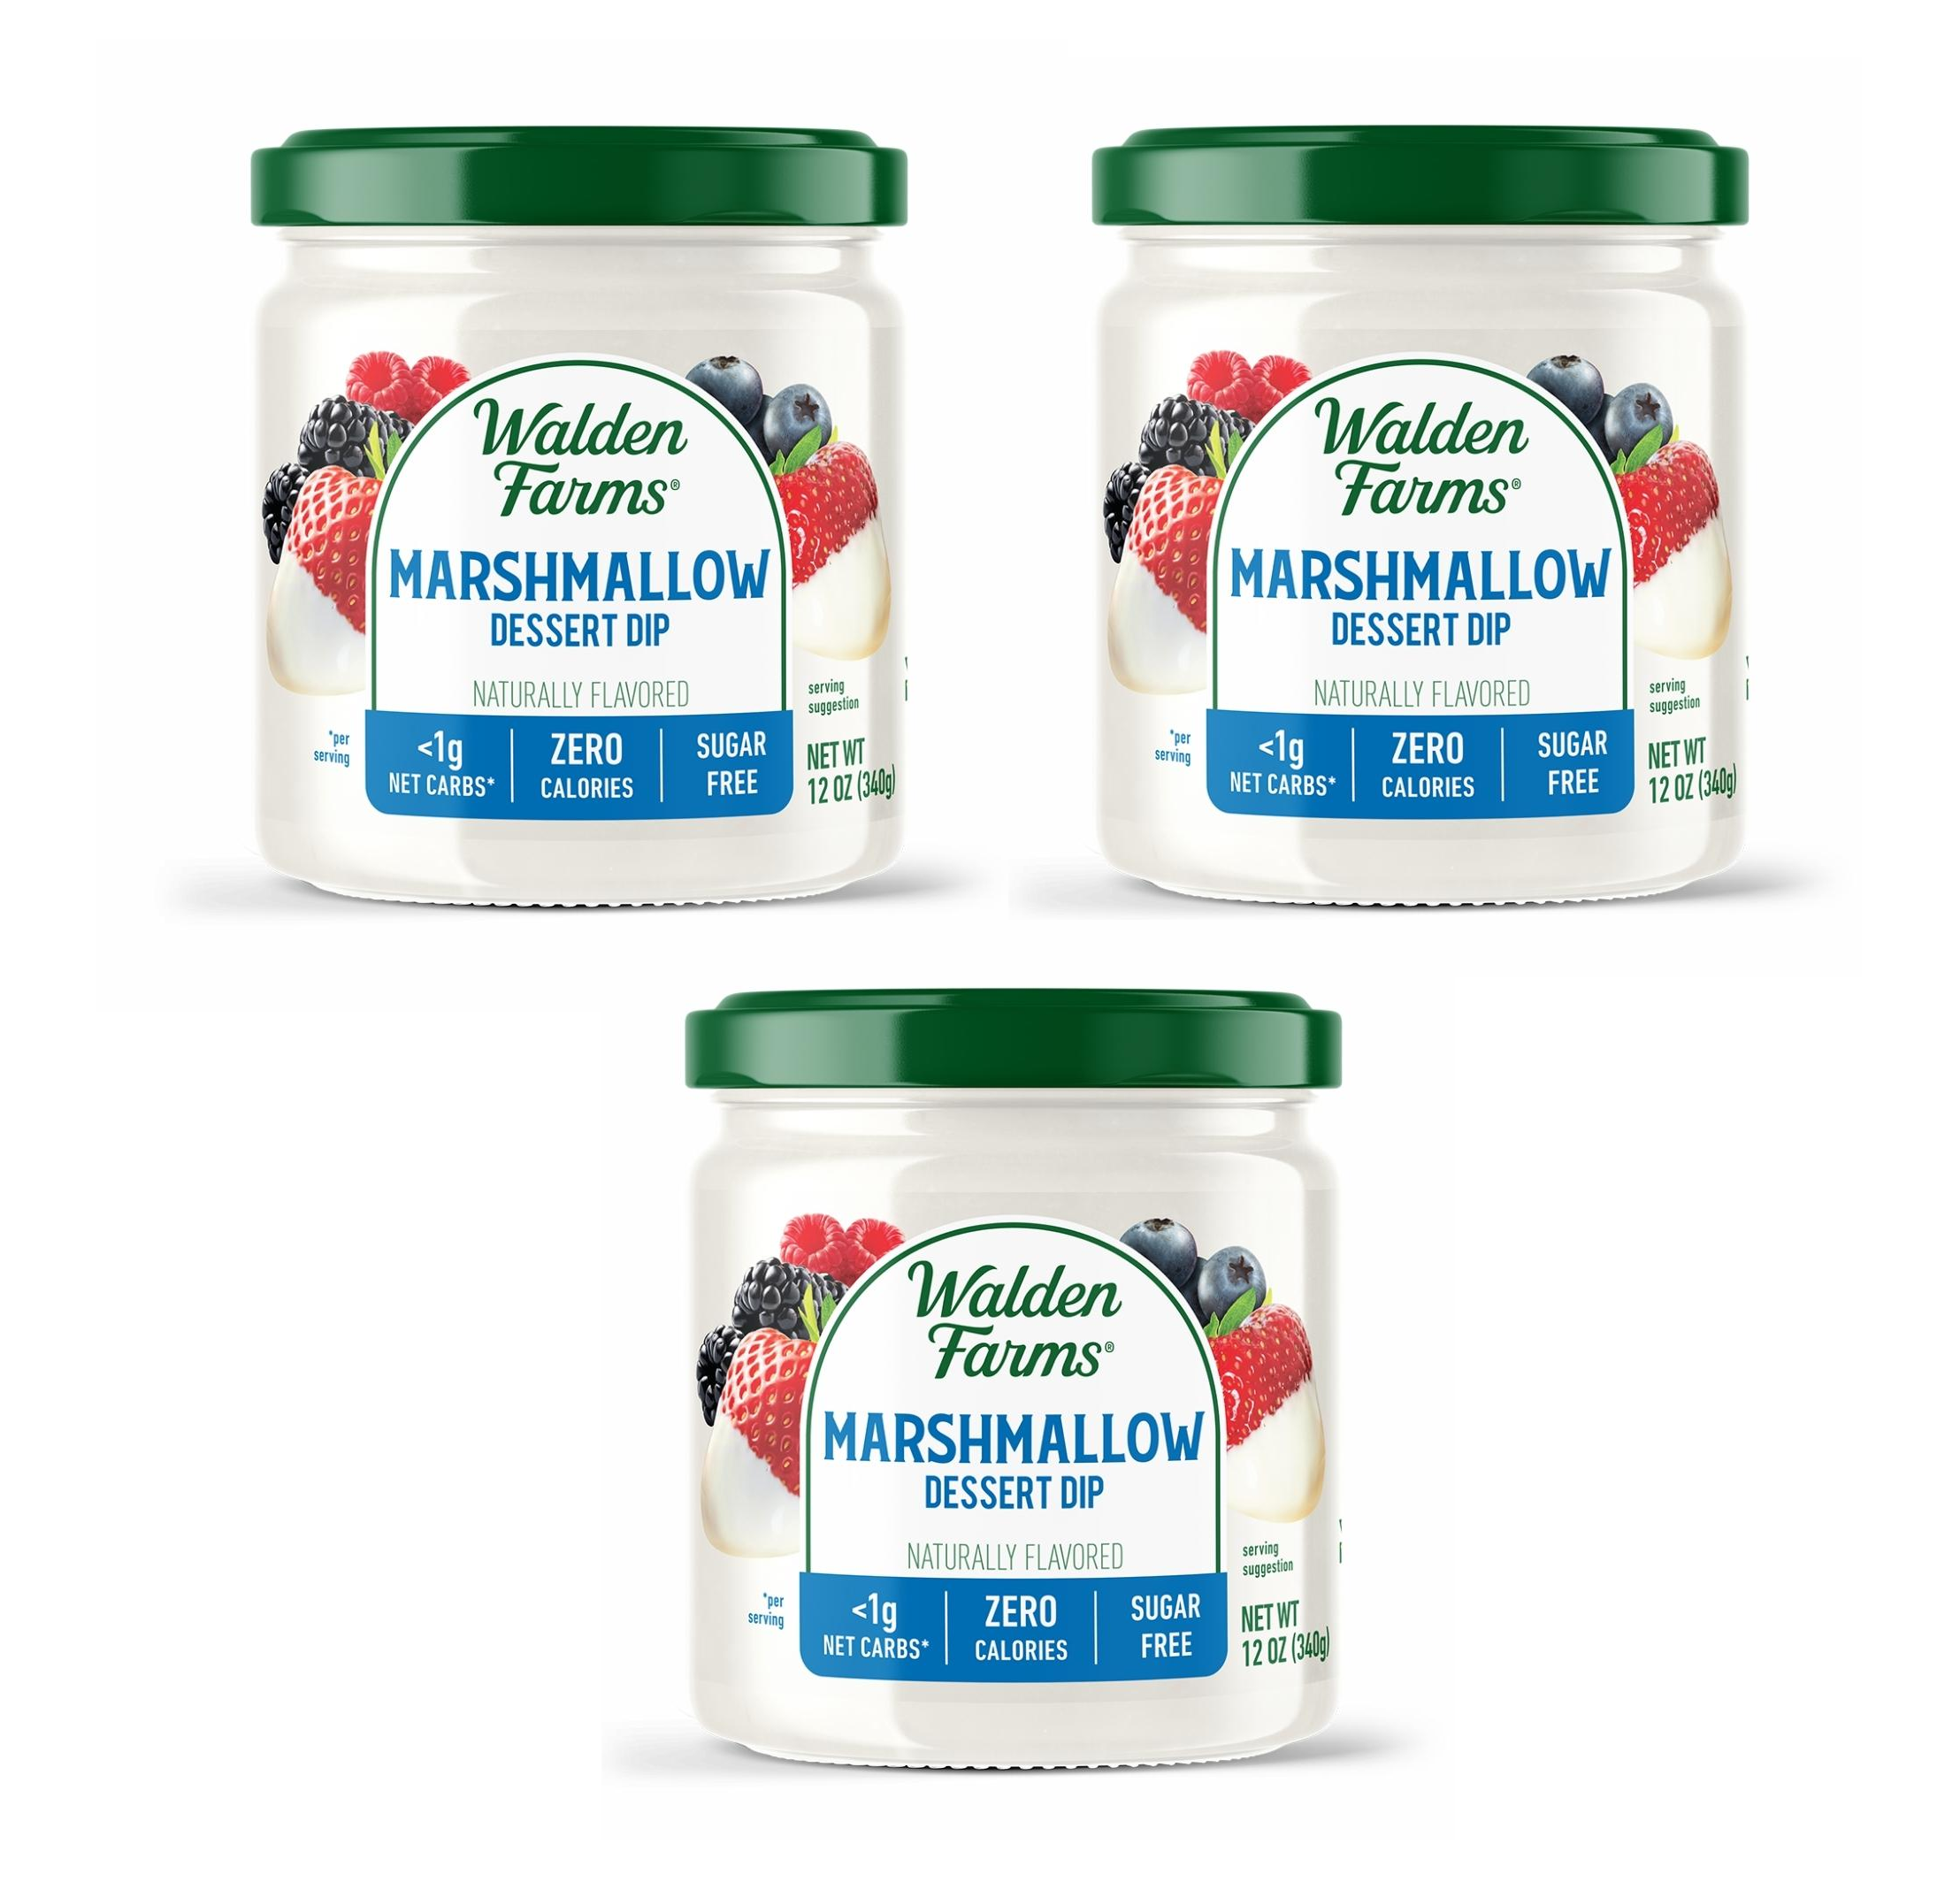 #Flavor_Marshmallow #Size_3 Jars